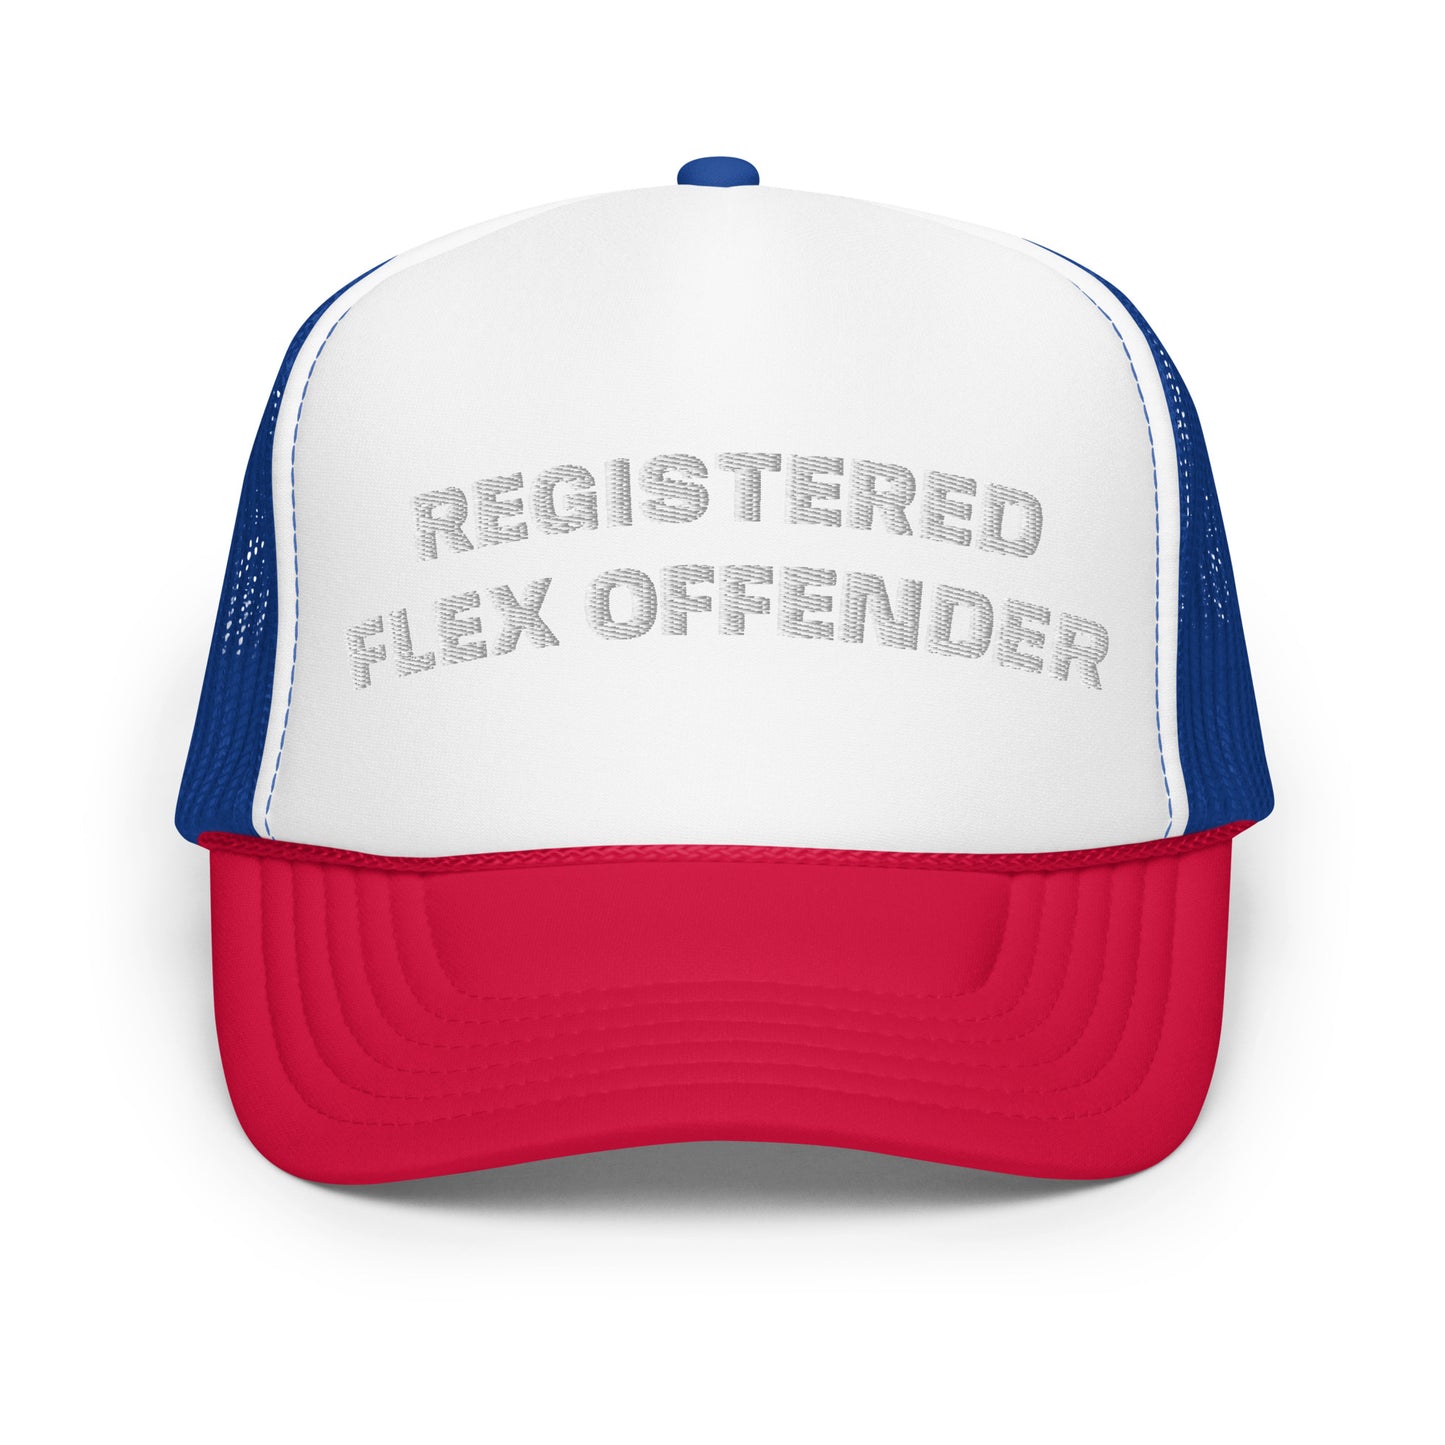 Registered Flex Offender Foam Trucker Hat